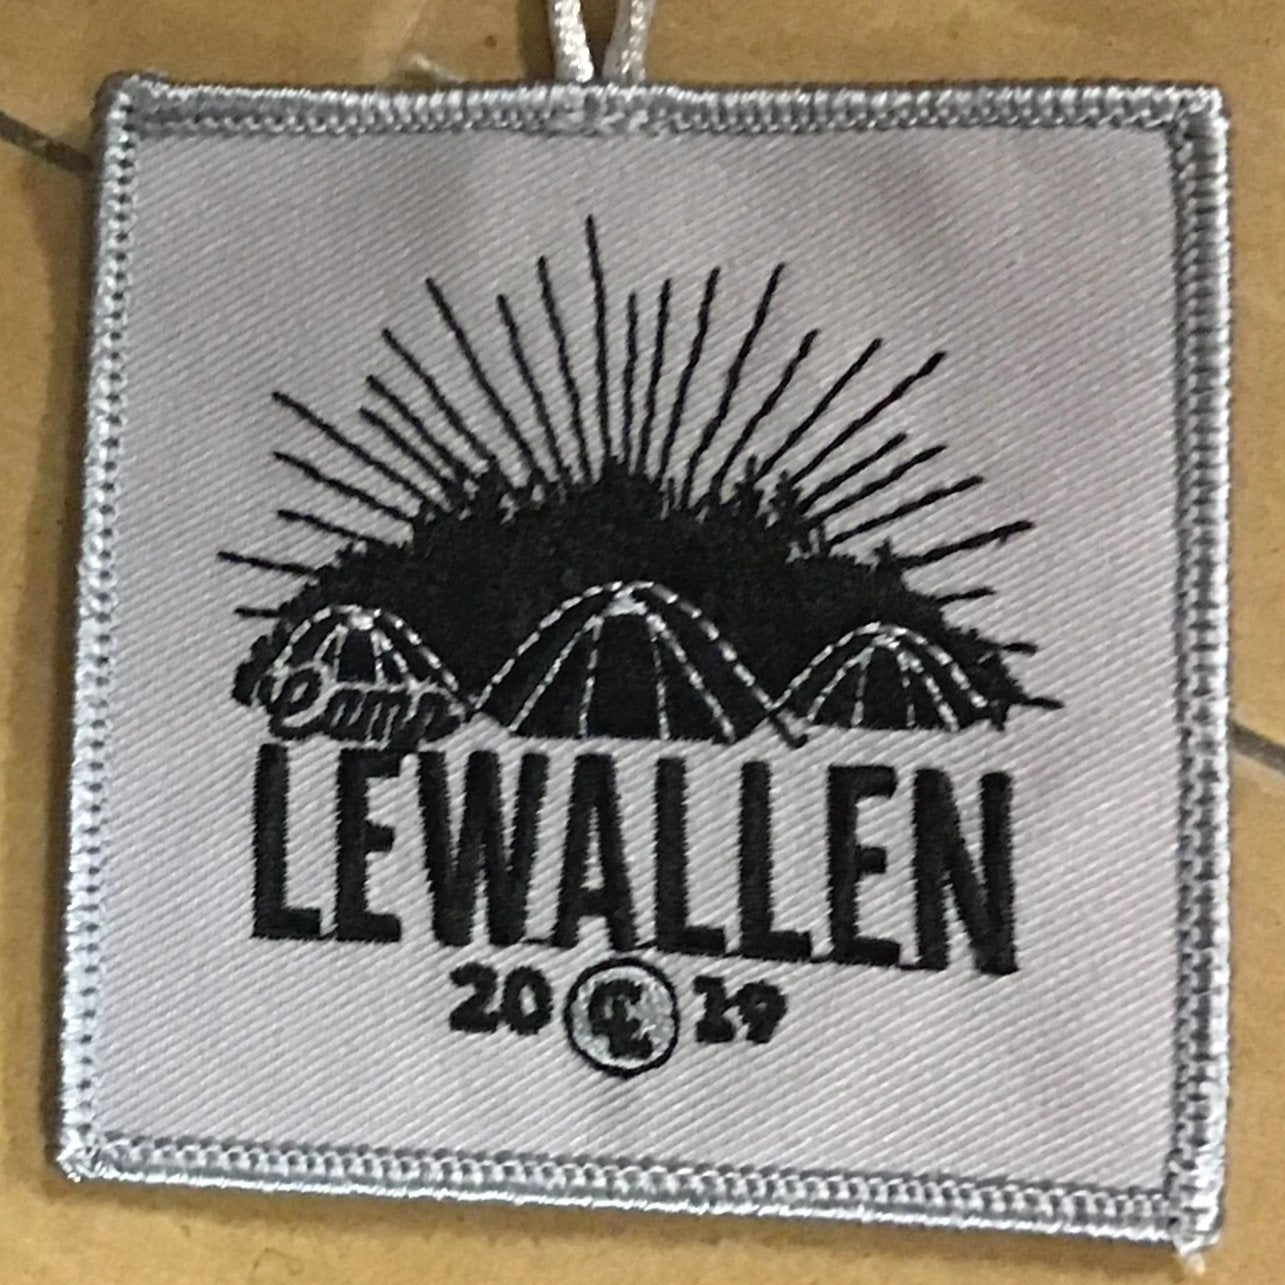 Emblem 2019 Lewallen patch with loop gray